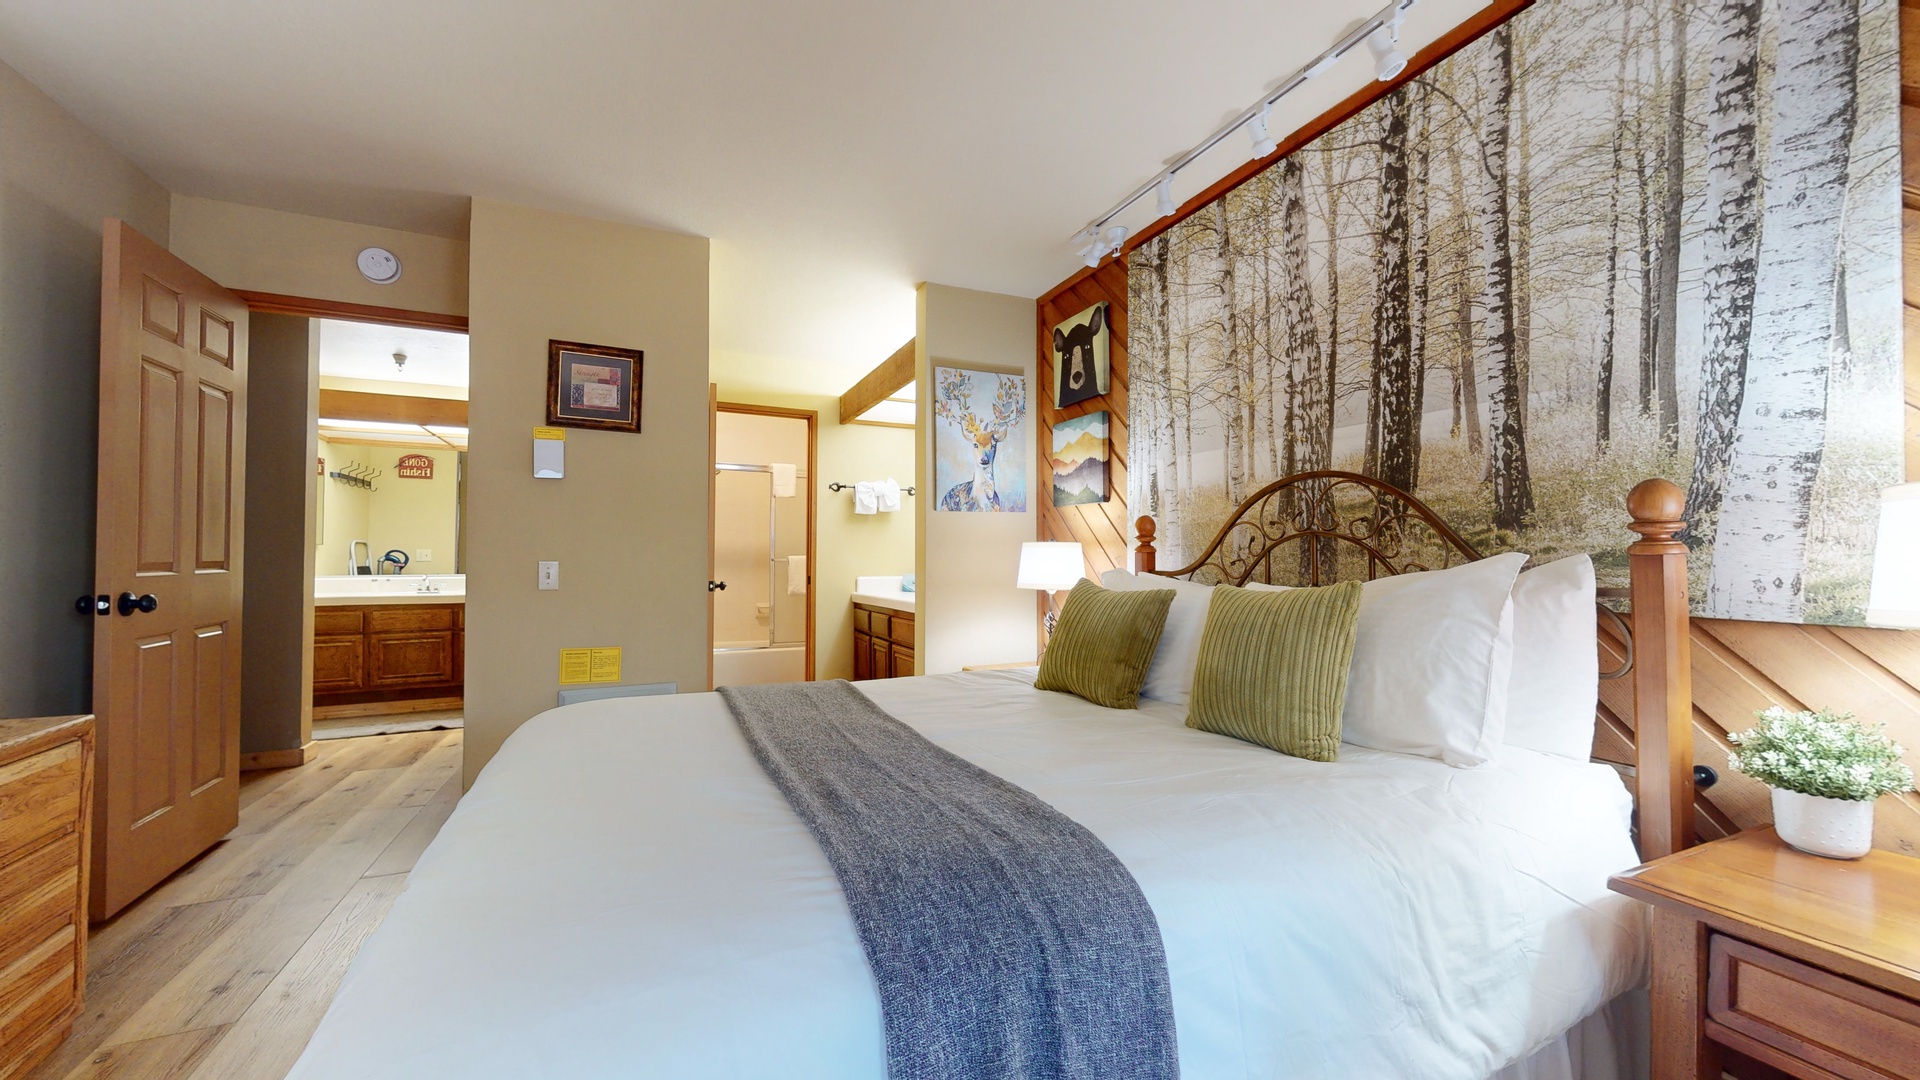 Bedroom 2 with Queen bed, Twin bed, balcony access, and en-suite